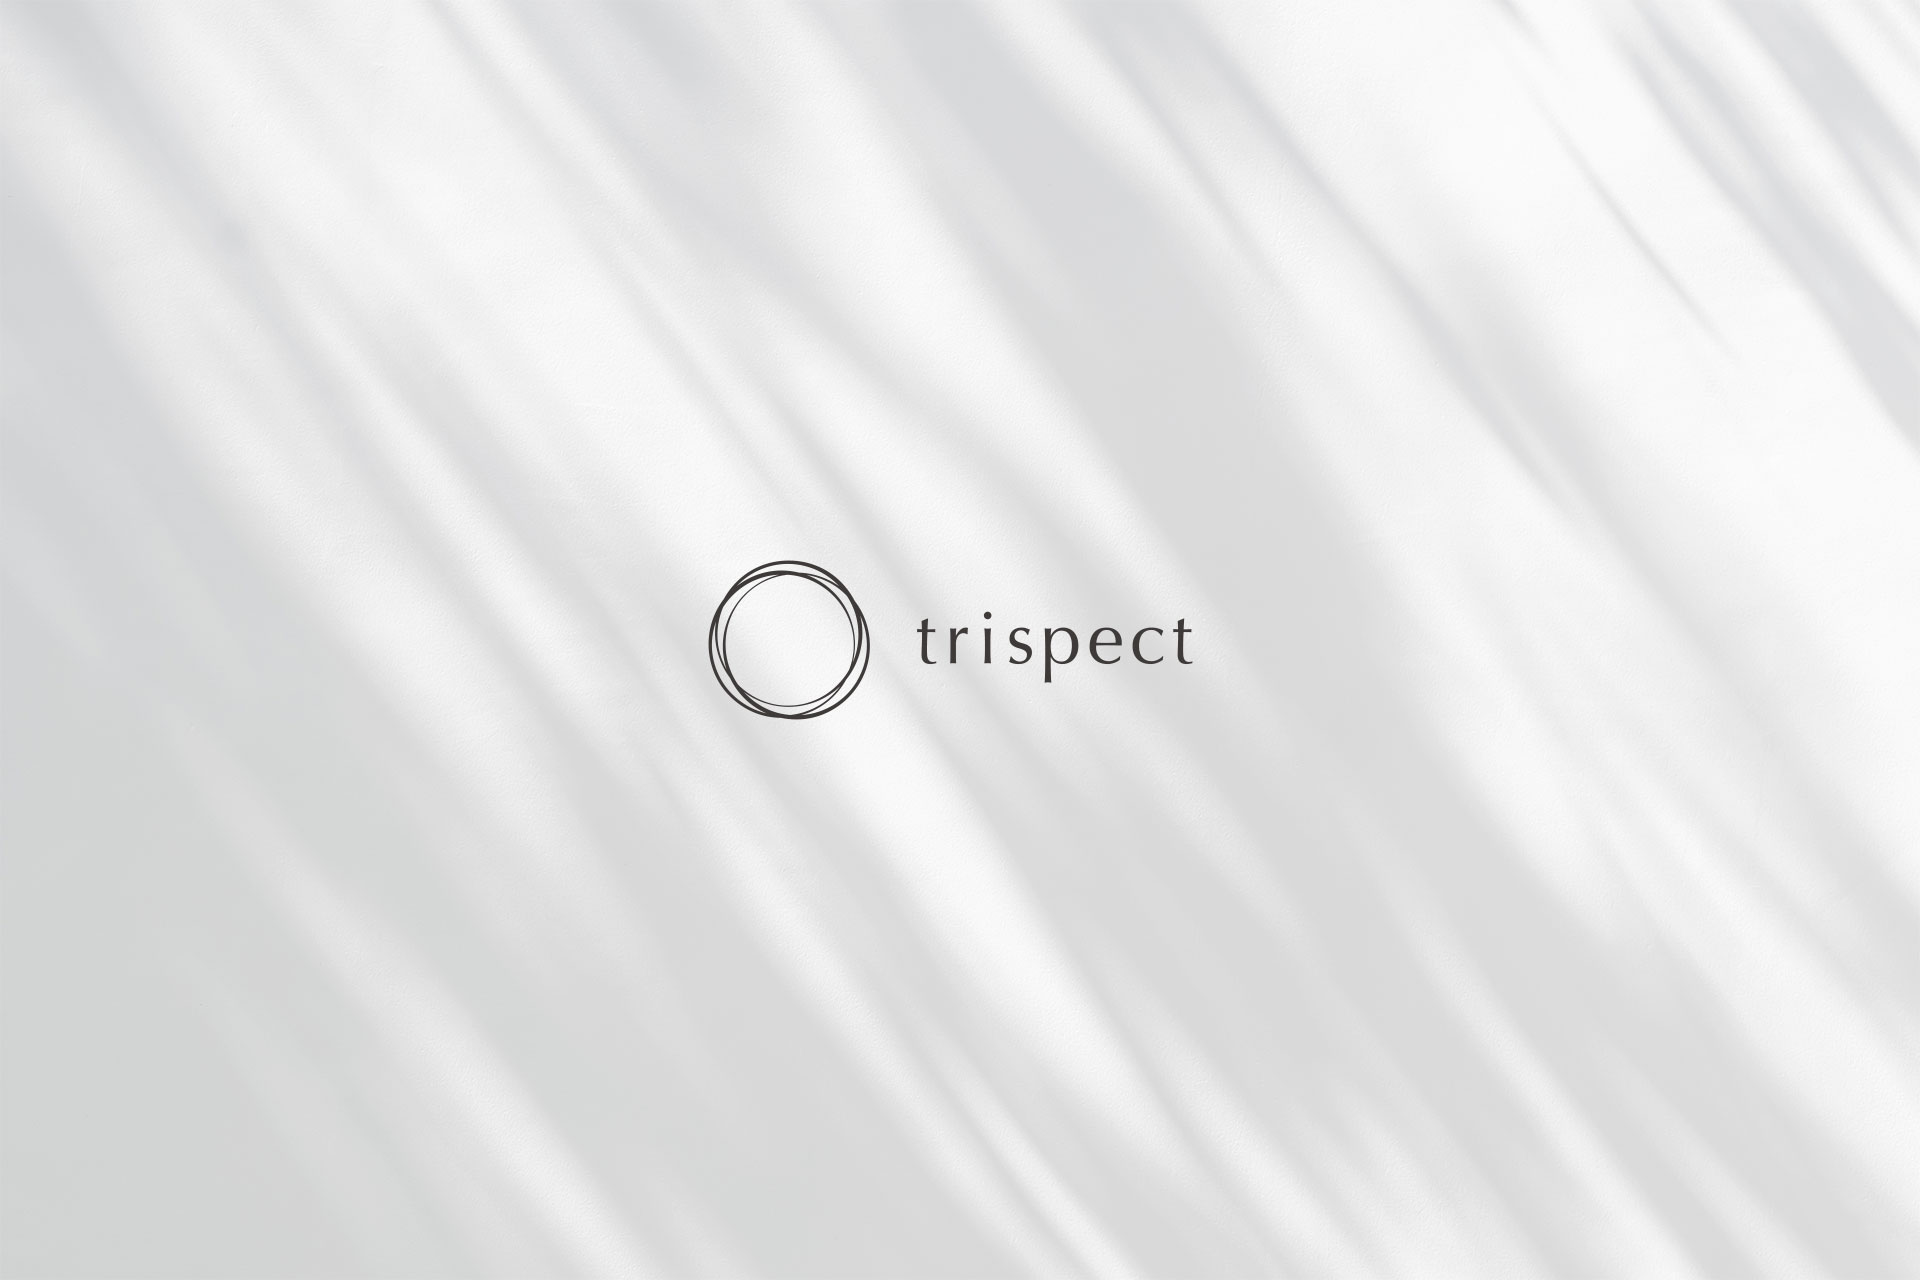 trispect